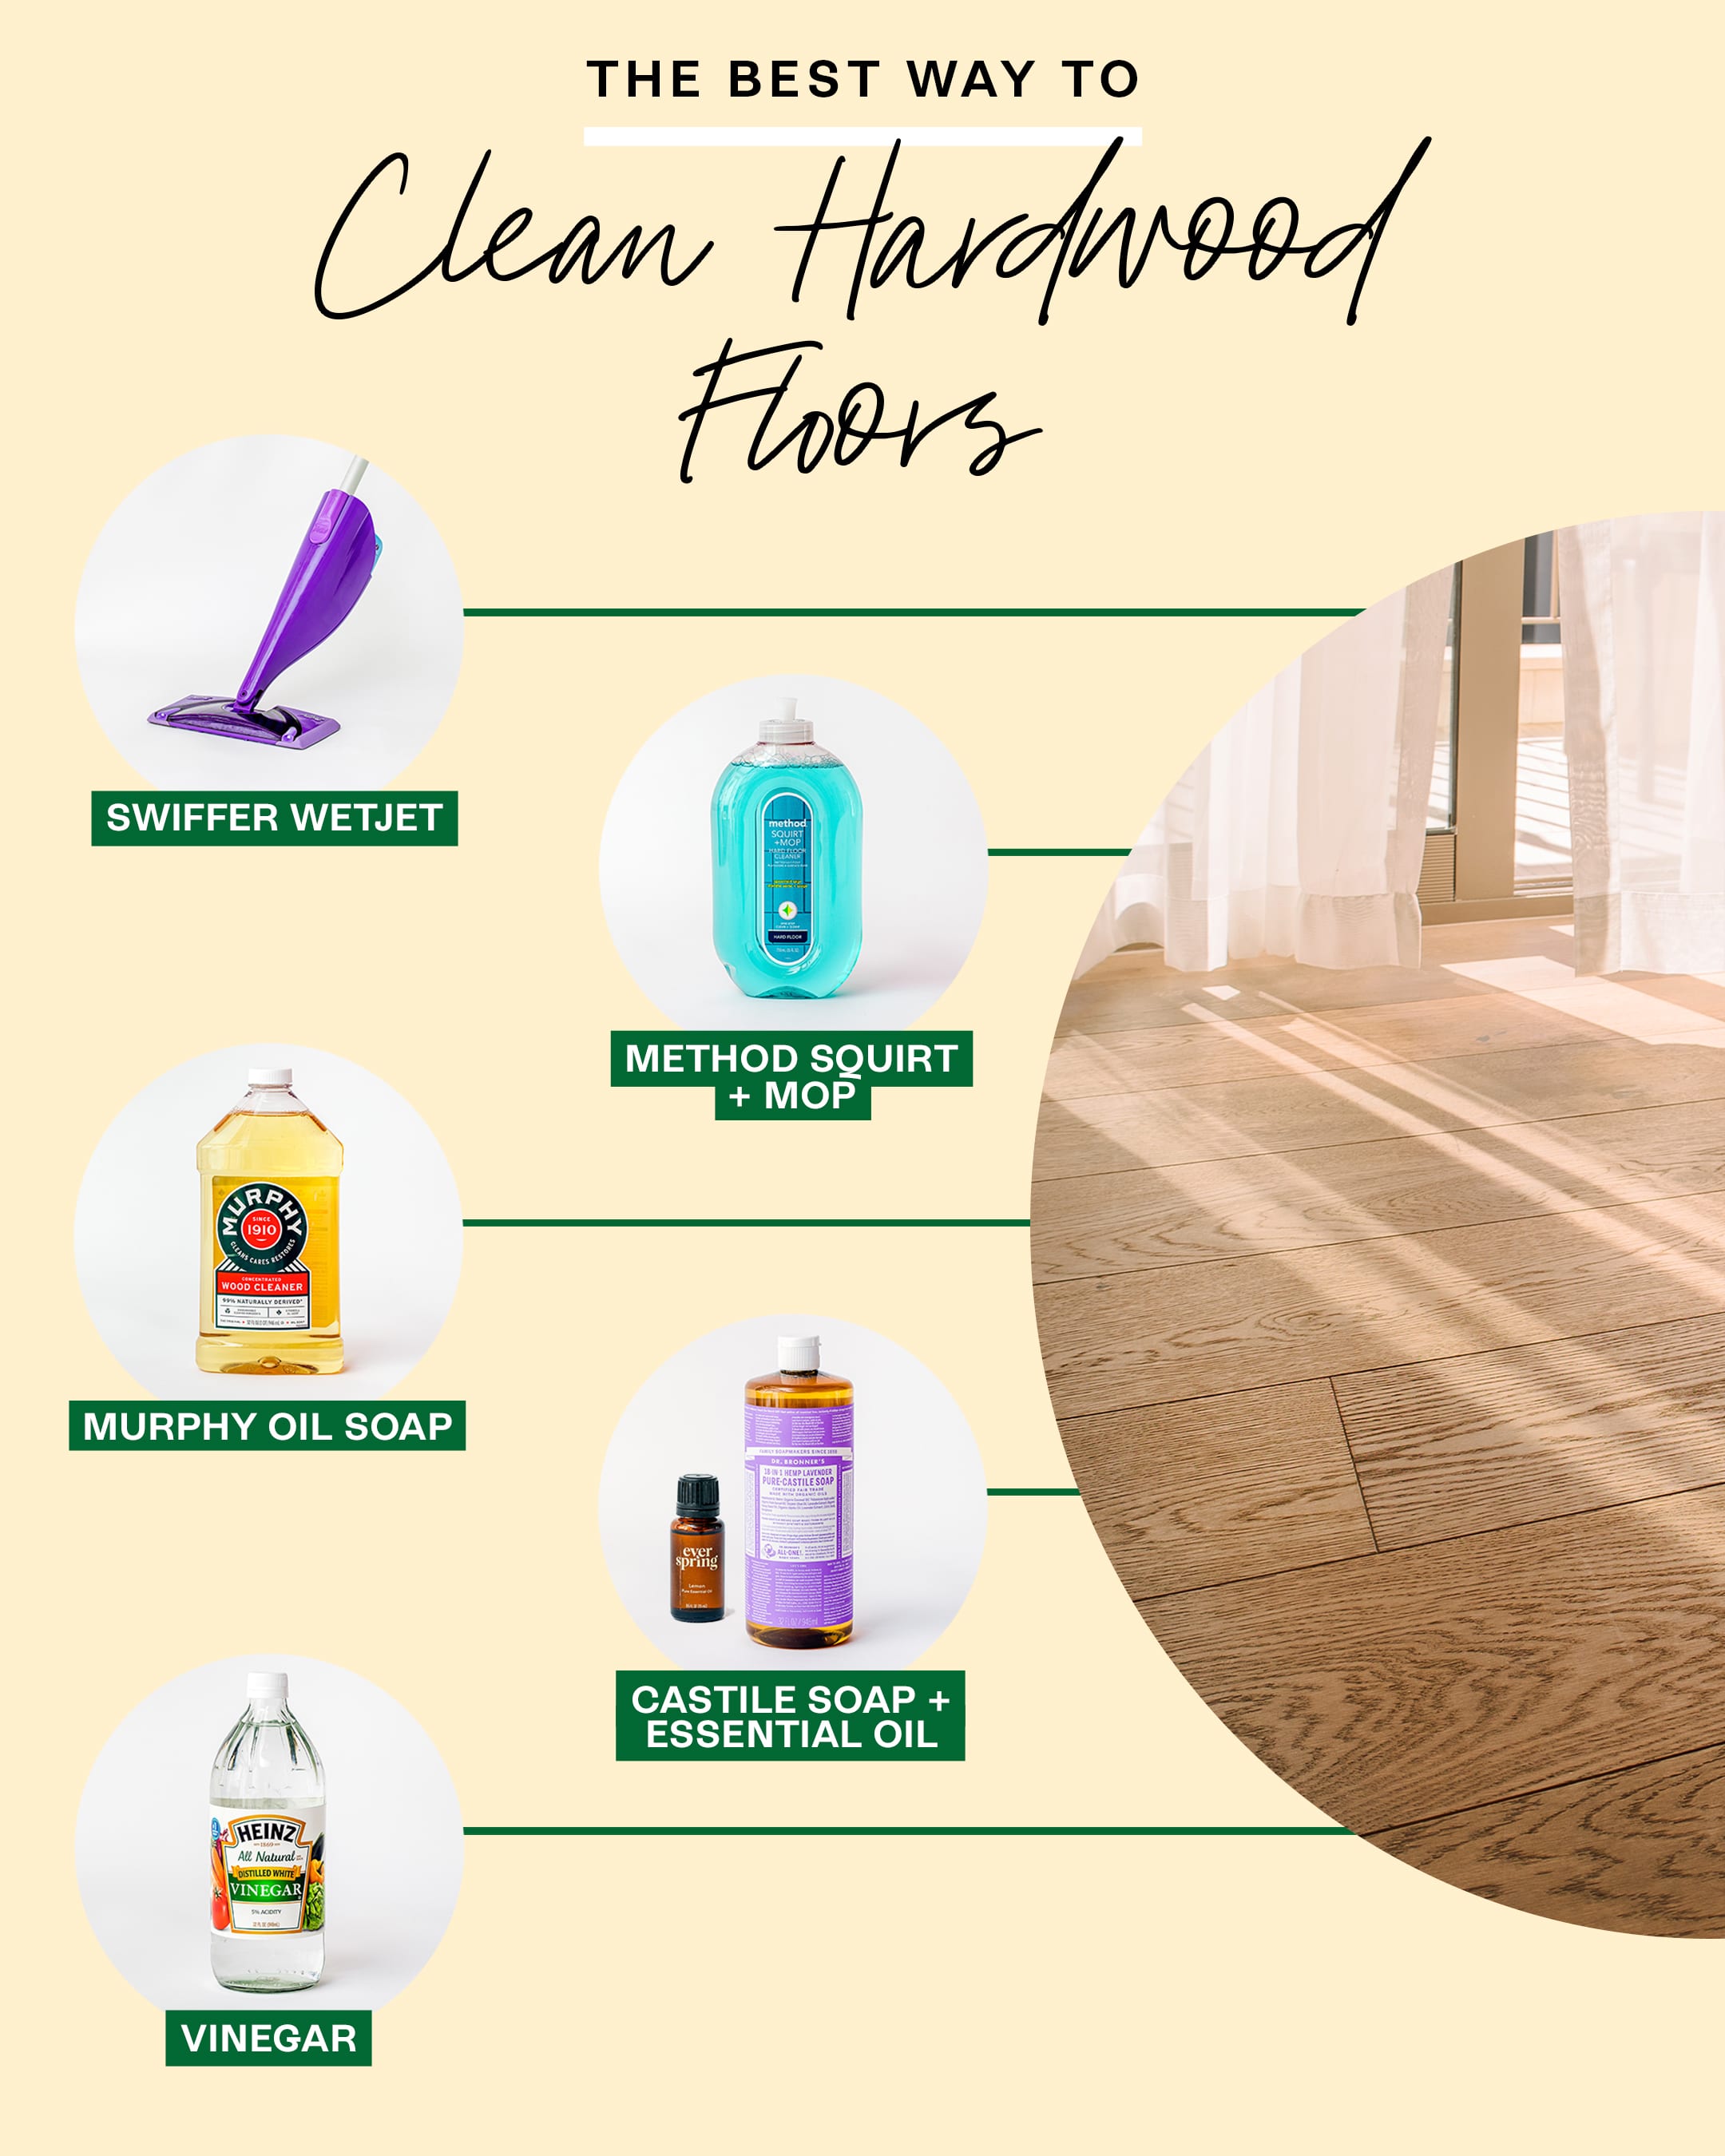 Top 5 Simple Homemade Floor cleaner DIY Recipes